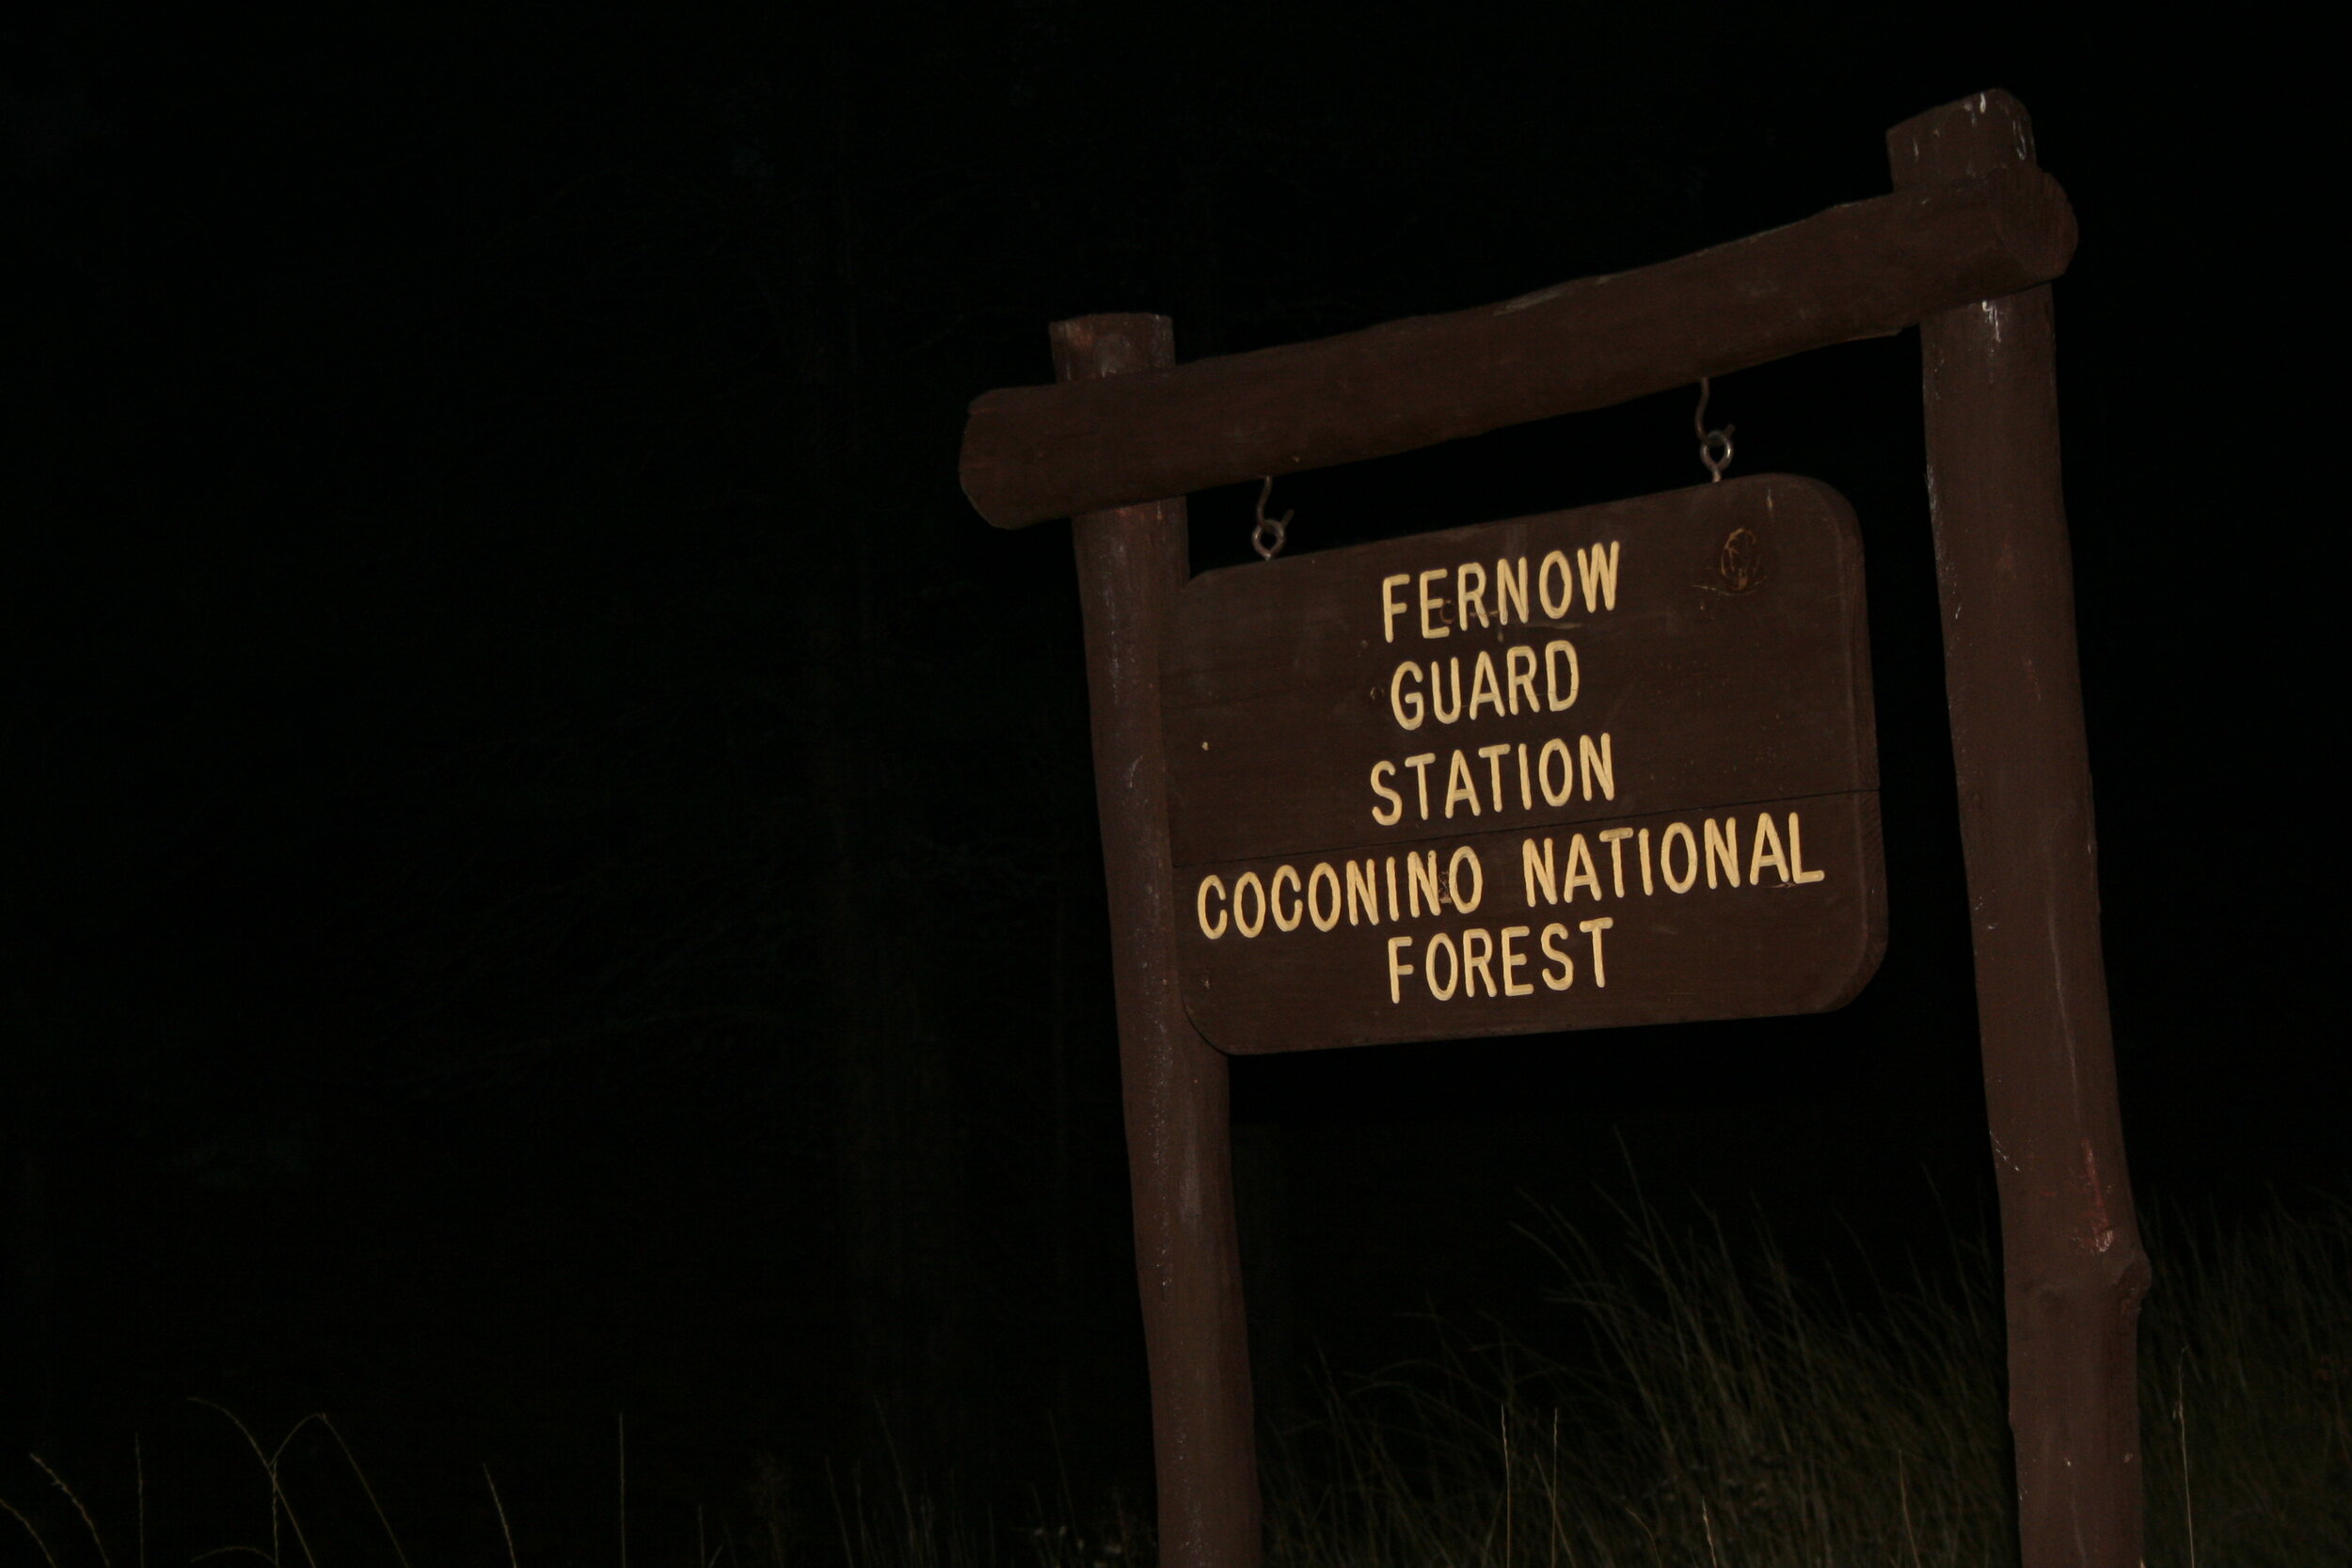   Arriving at Fernow Cabin in the dark.  